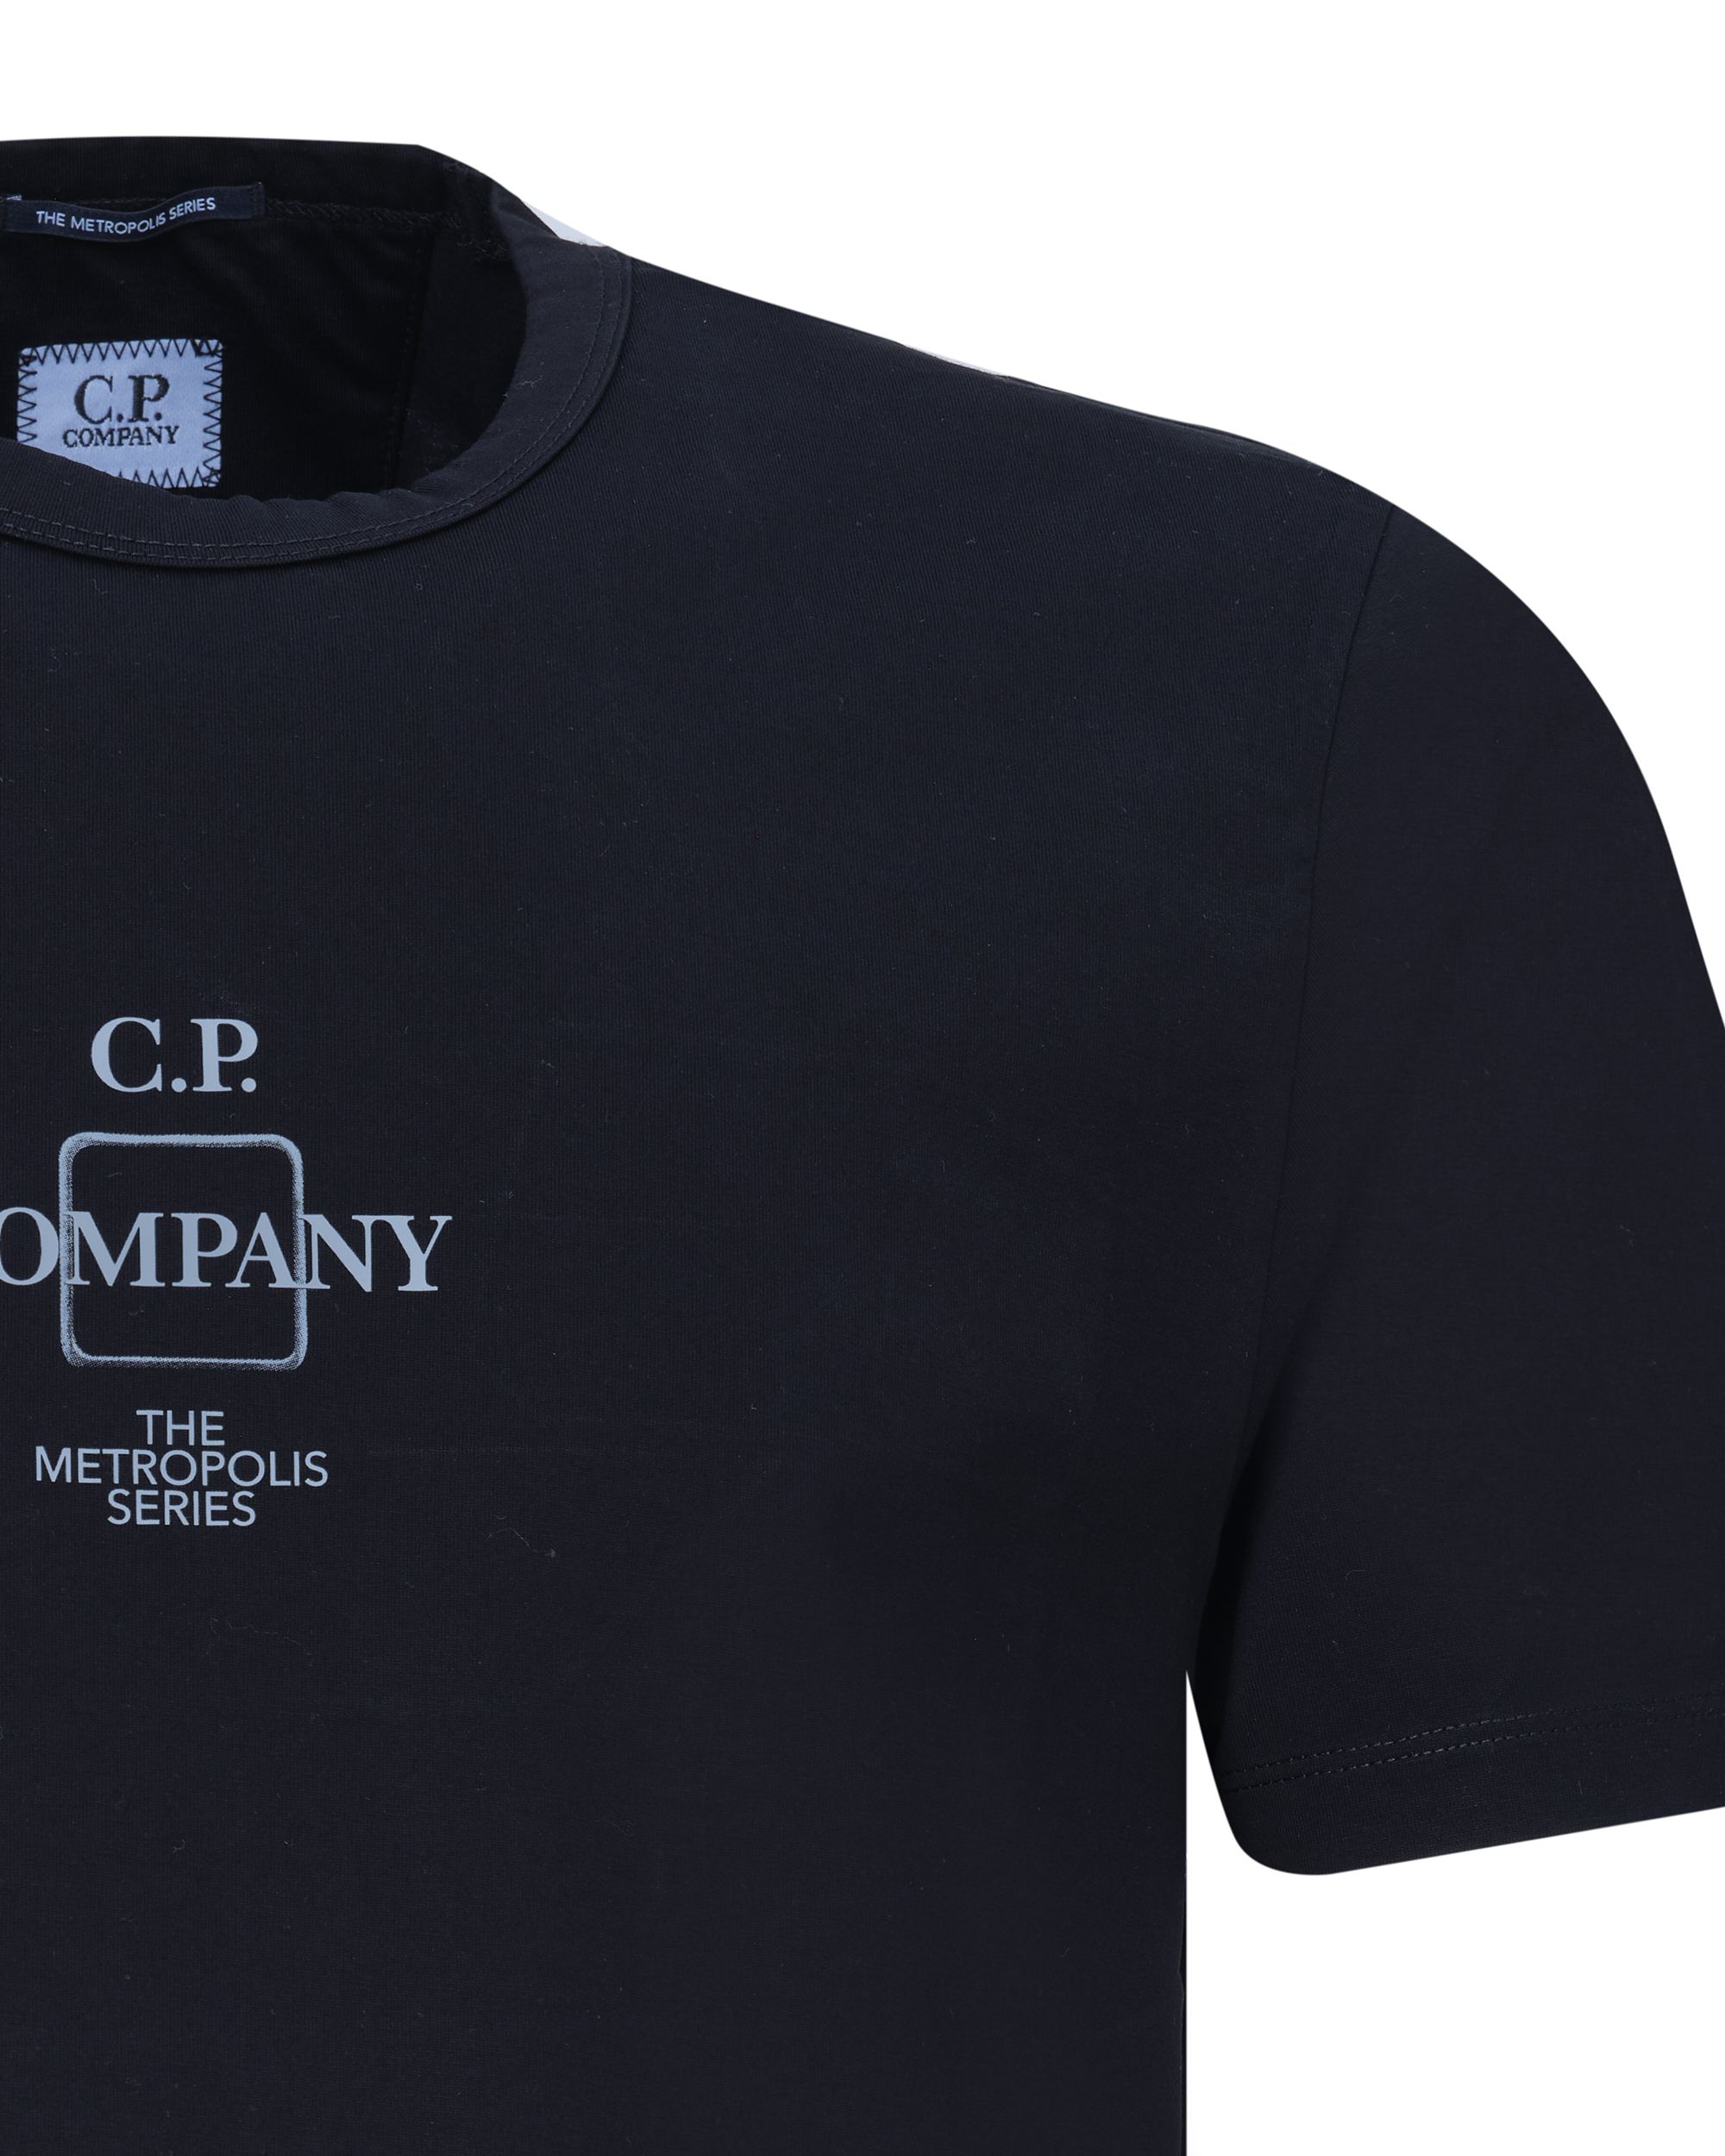 C.P Company T-shirt KM Zwart 078937-001-L